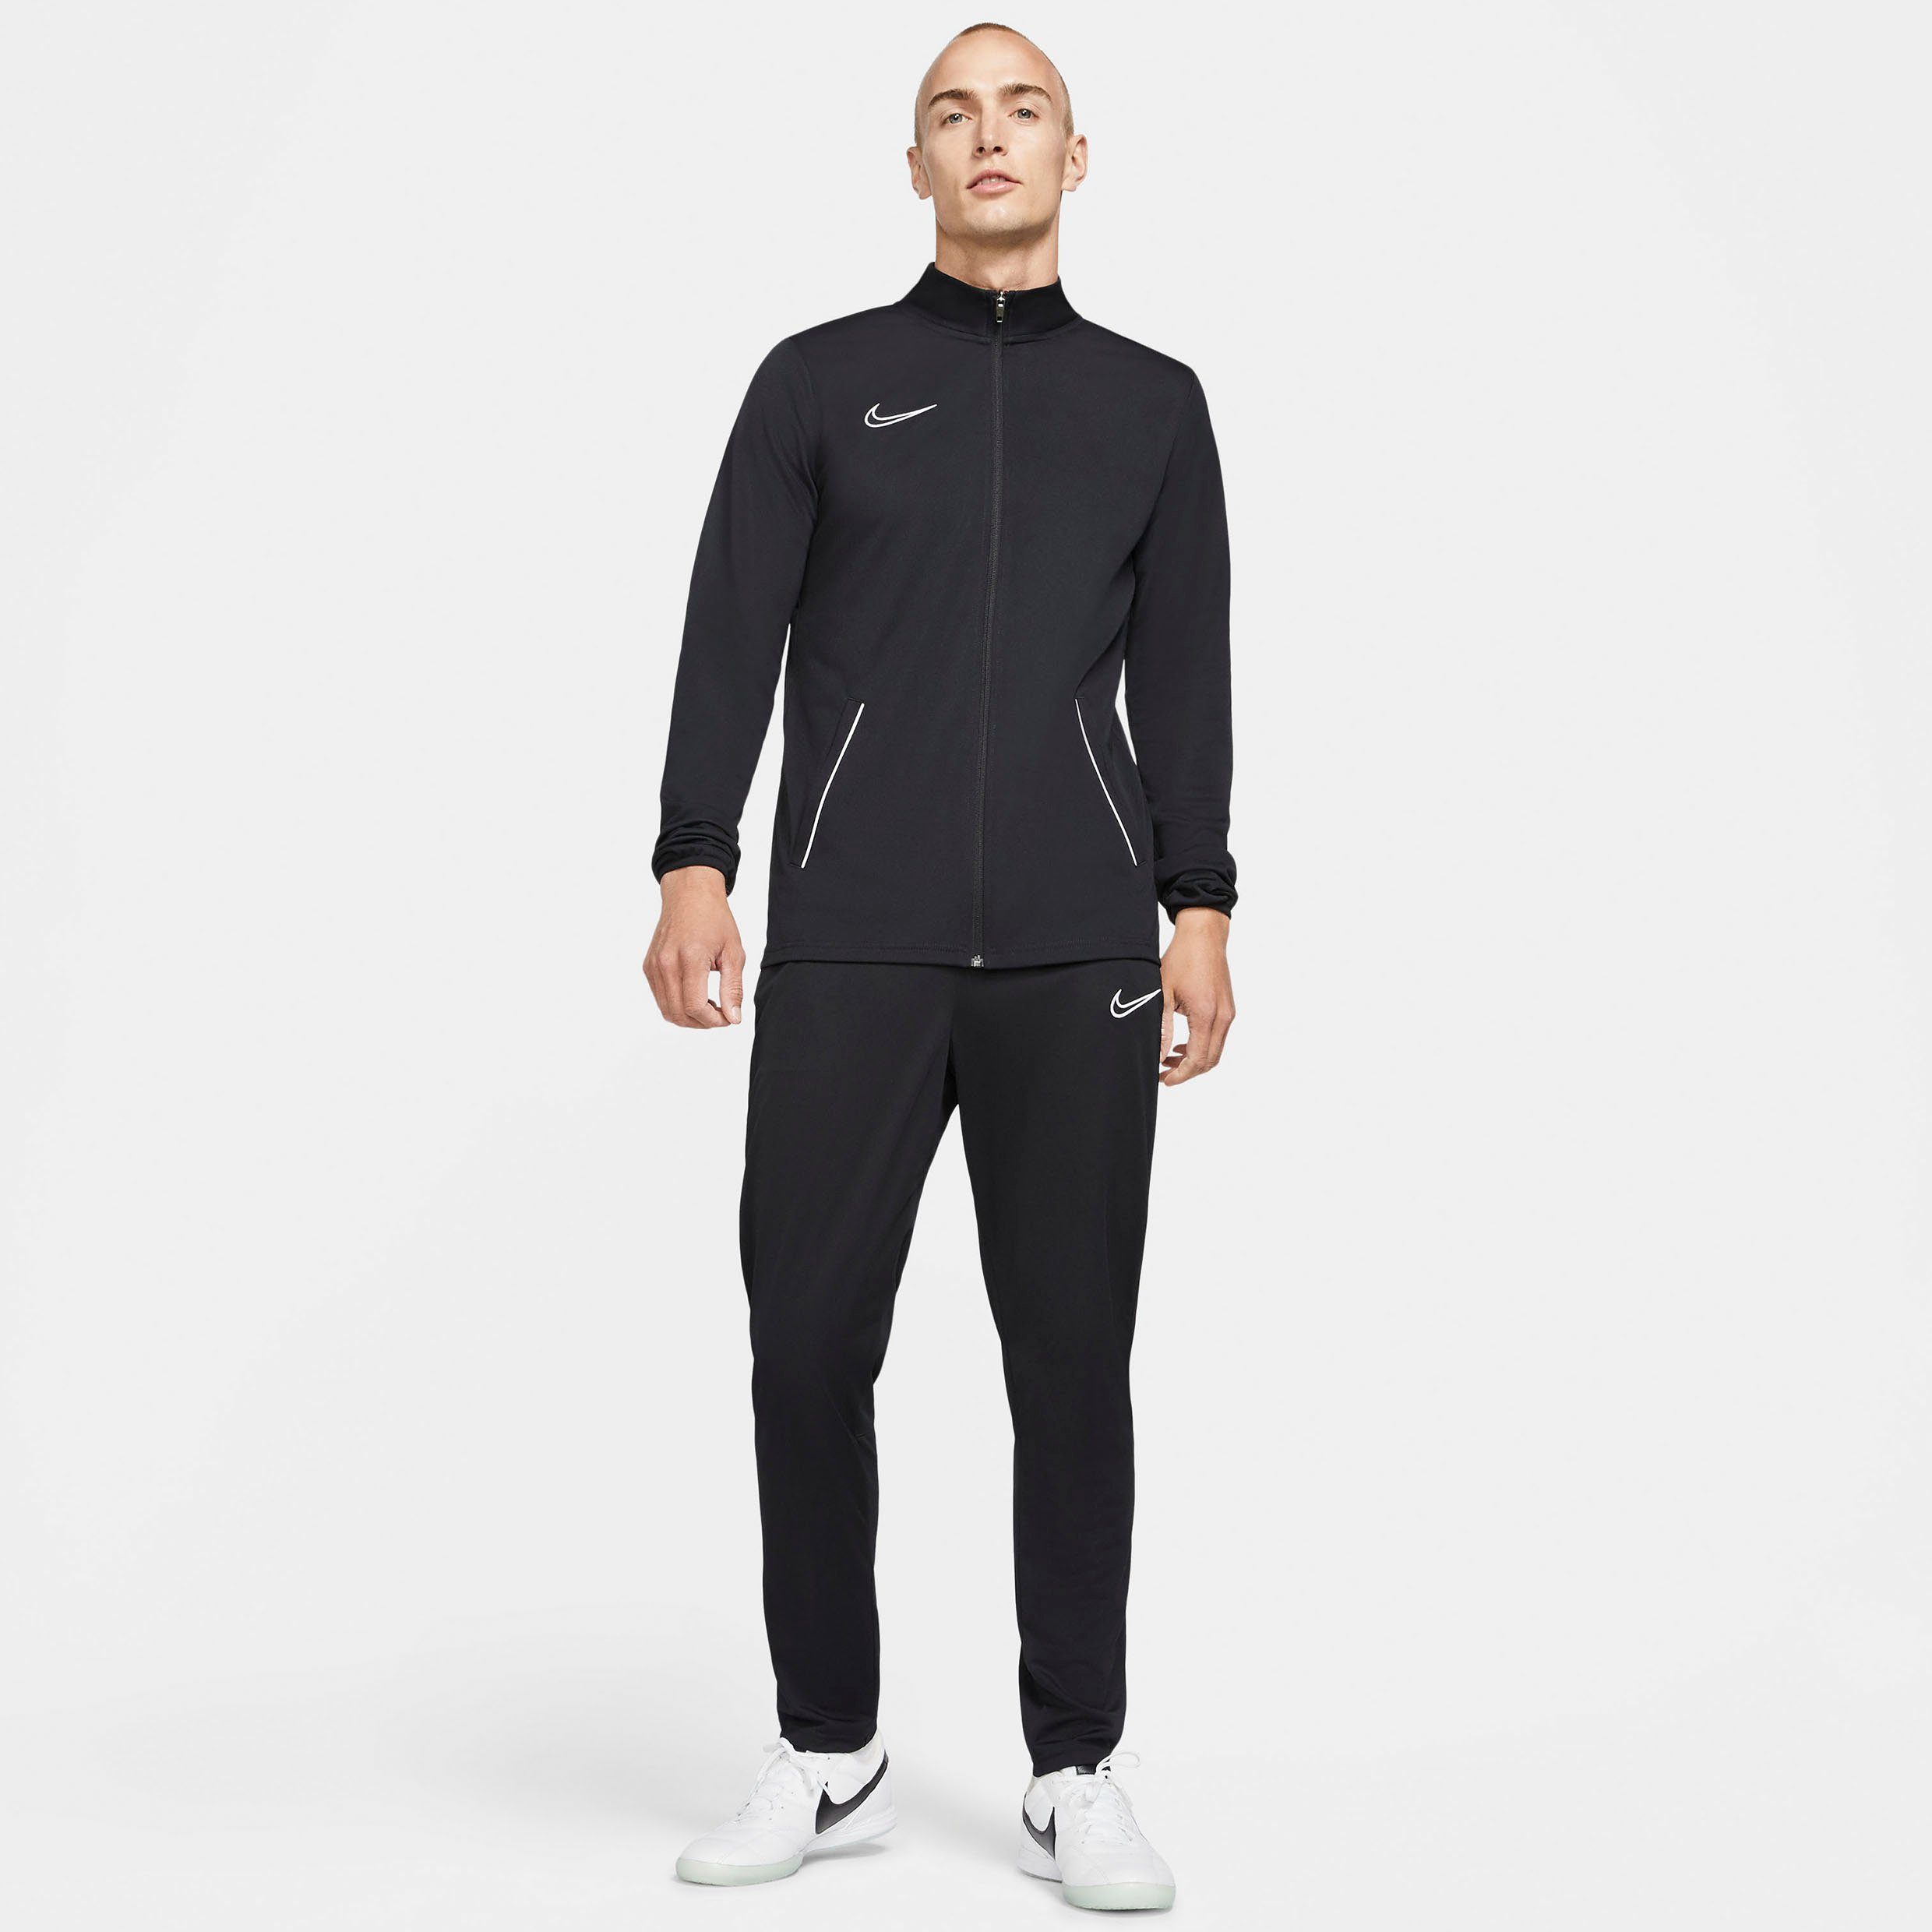 Nike Trainingsanzüge & Jogginganzüge kaufen» Tracksuits | OTTO